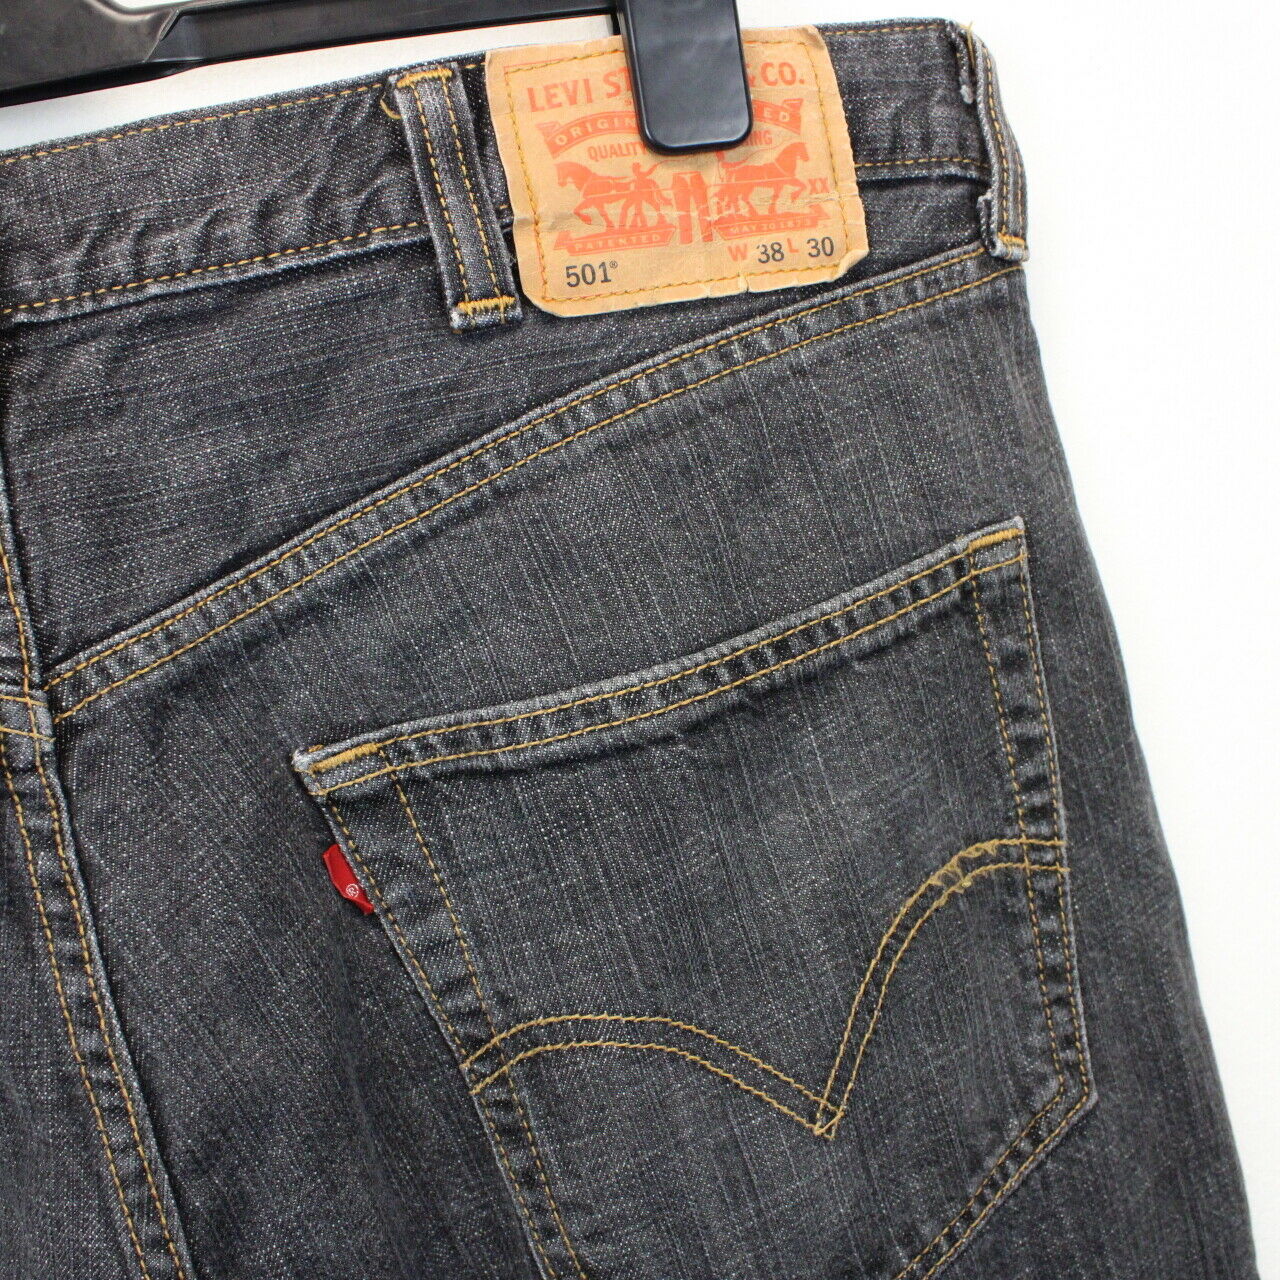 LEVIS 501 Jeans Grey Charcoal | W38 L30